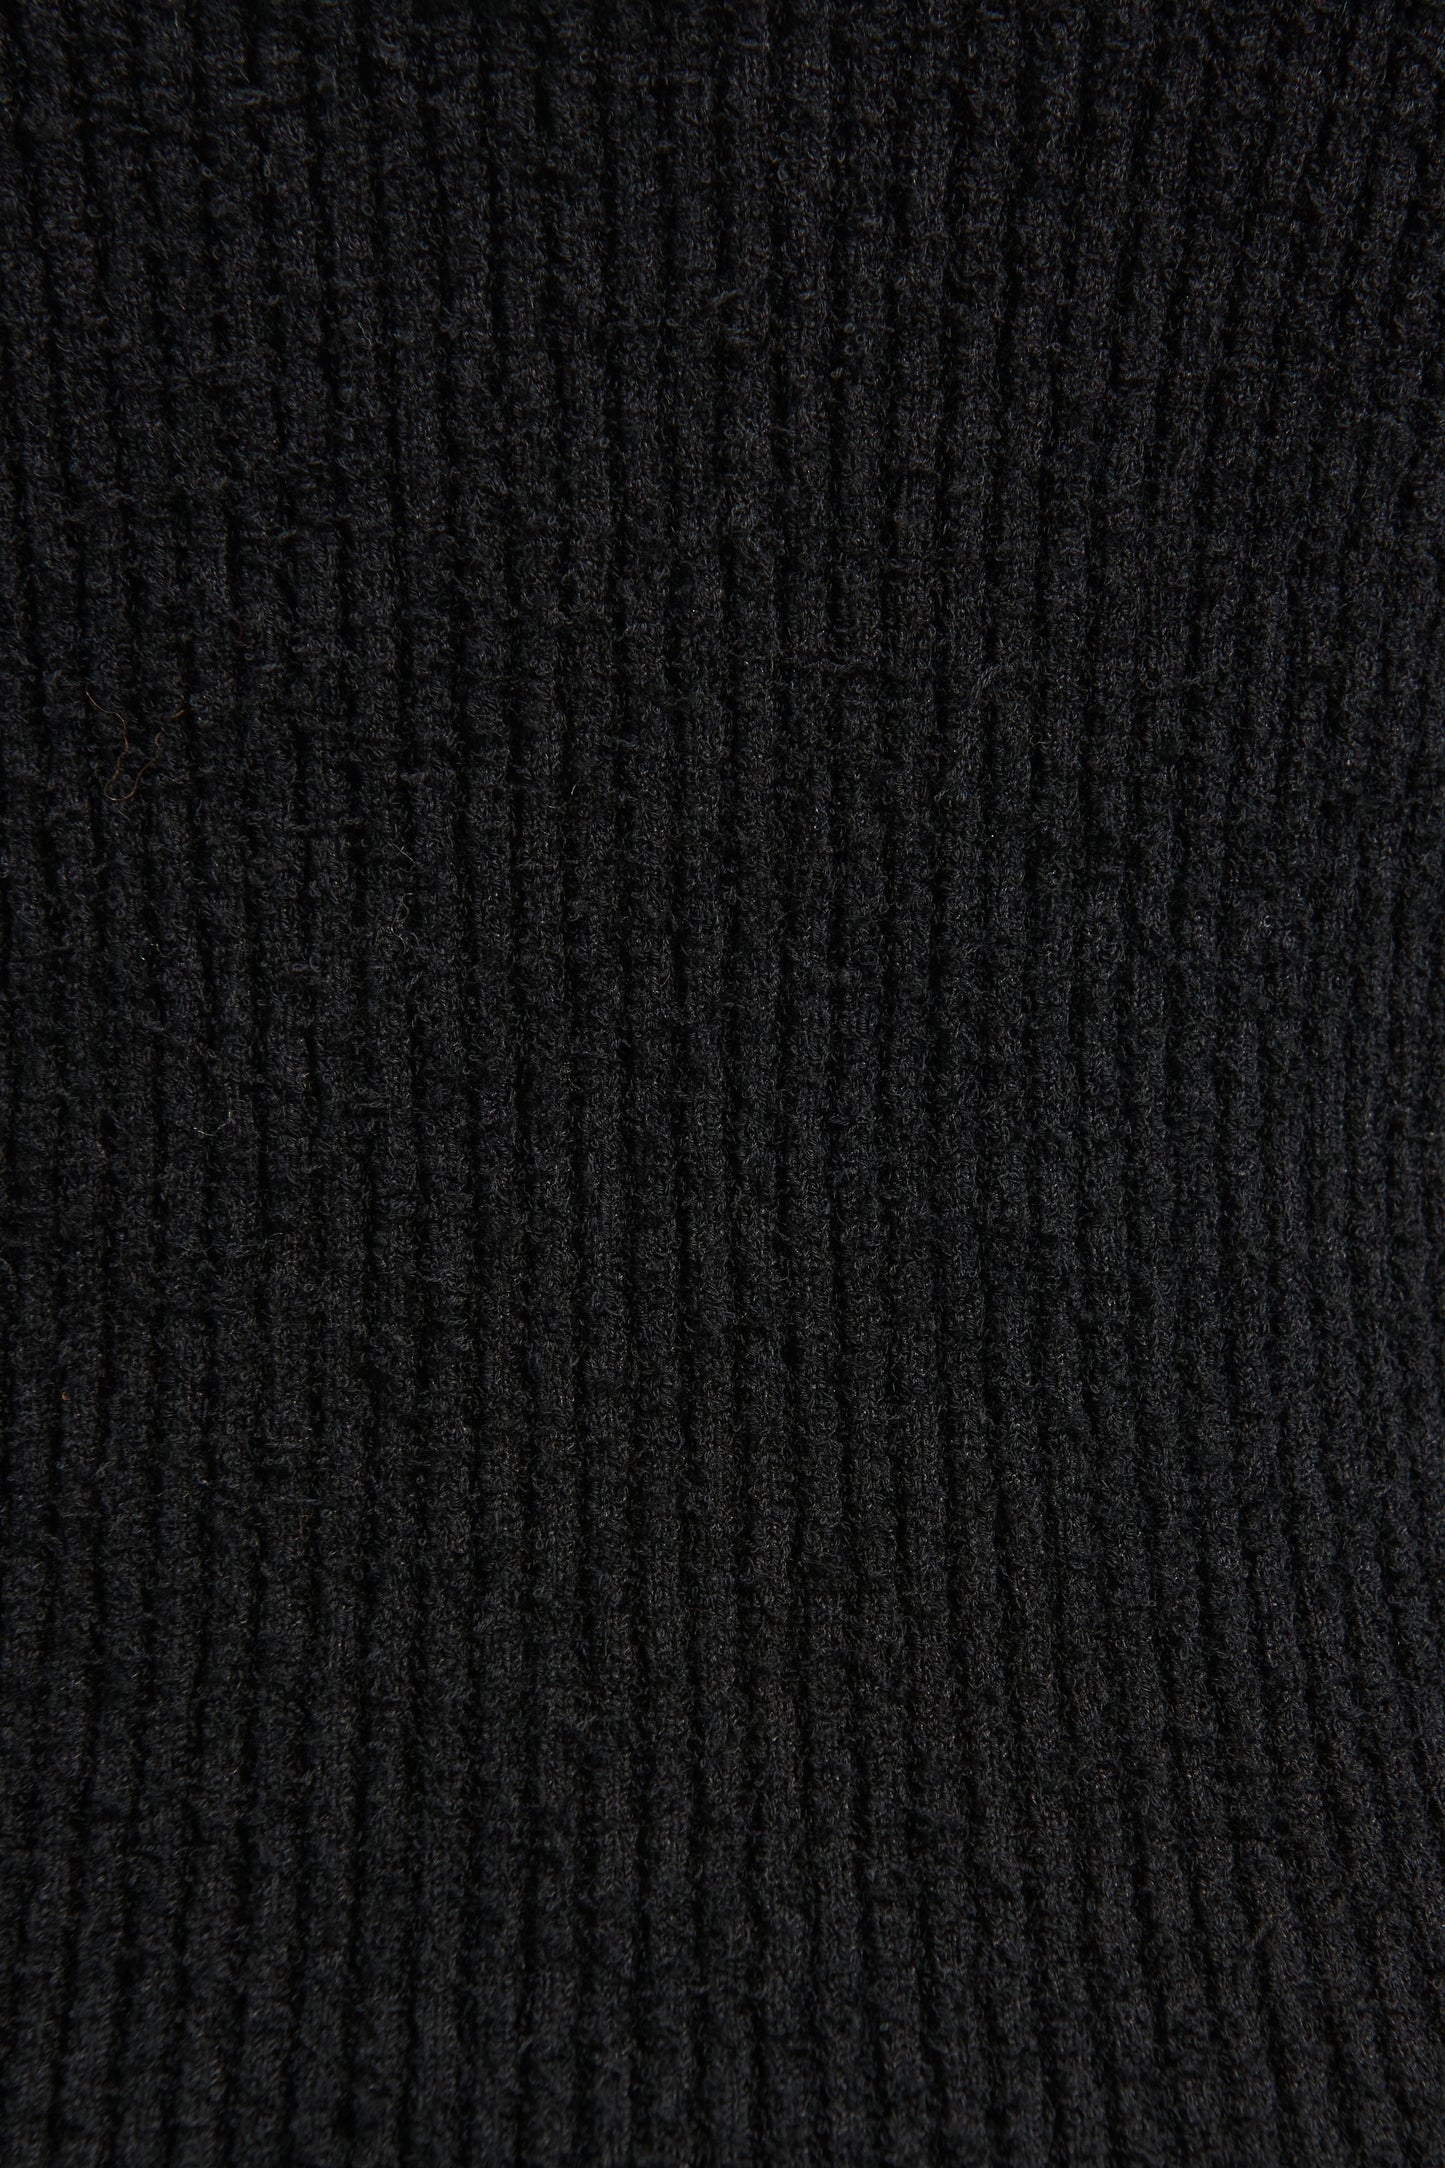 Black Knit  Bodycon Preowned Mini Dress